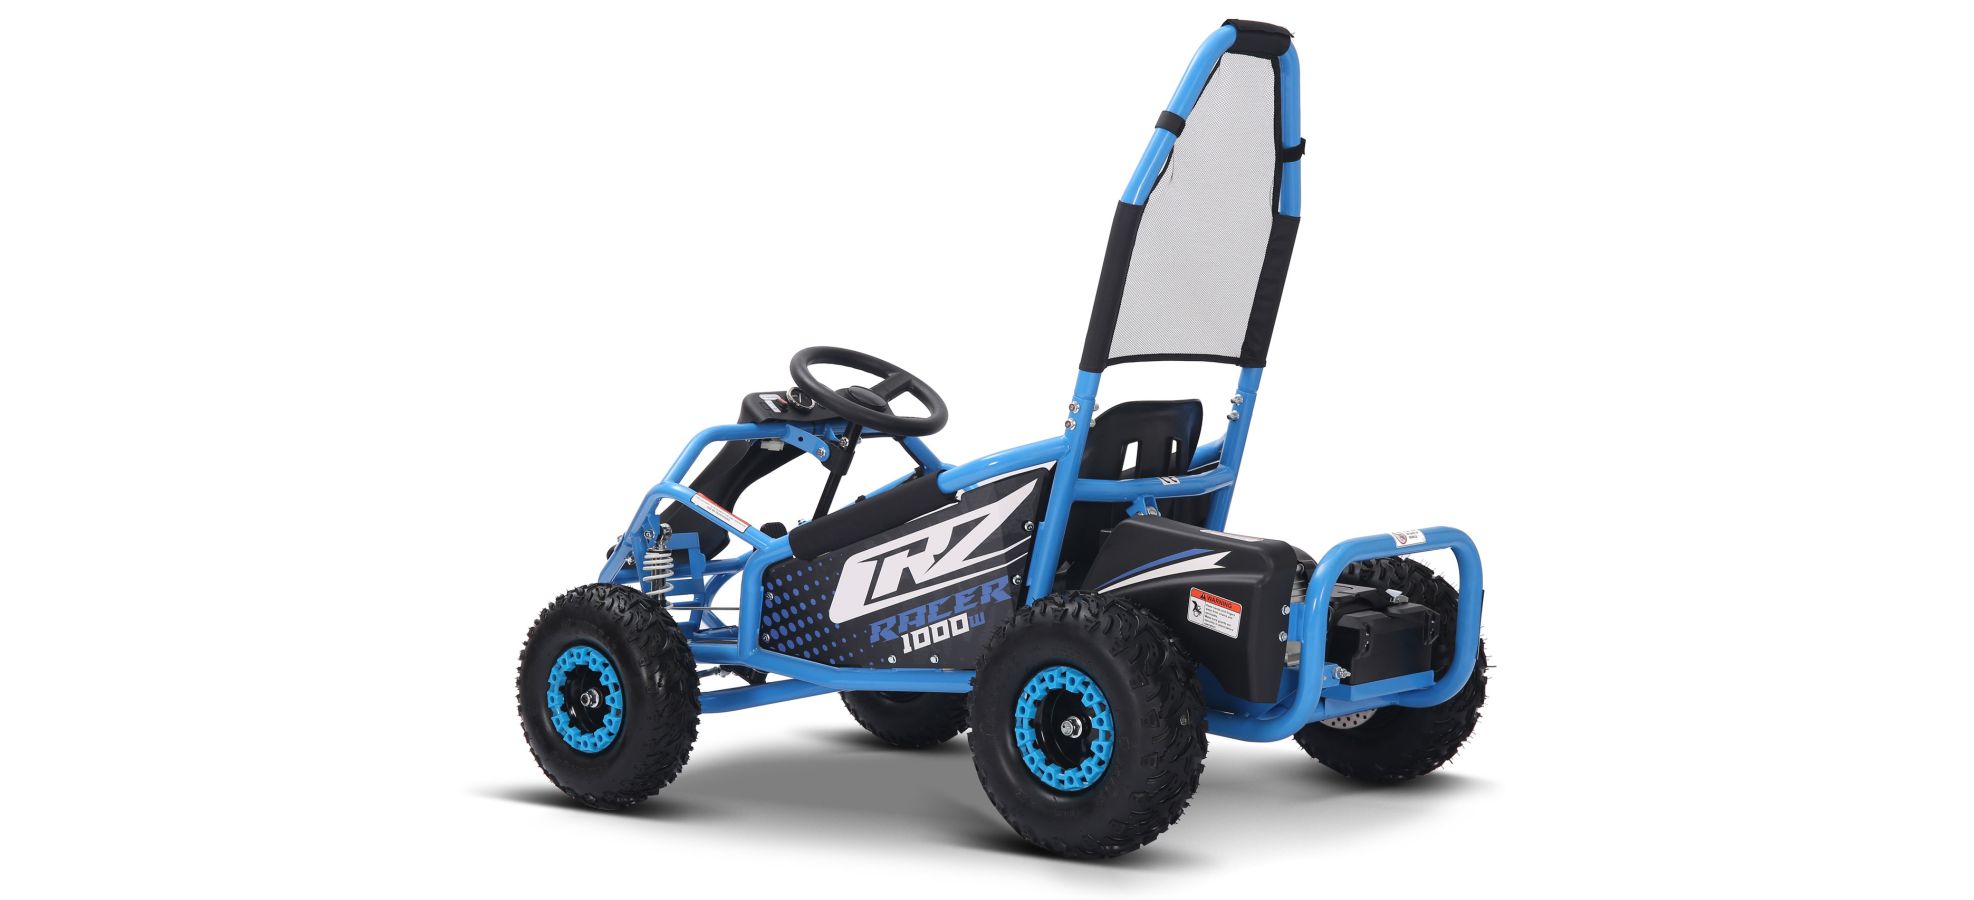 Karting Go Kart Electrique CRZ 1000W - Bleu